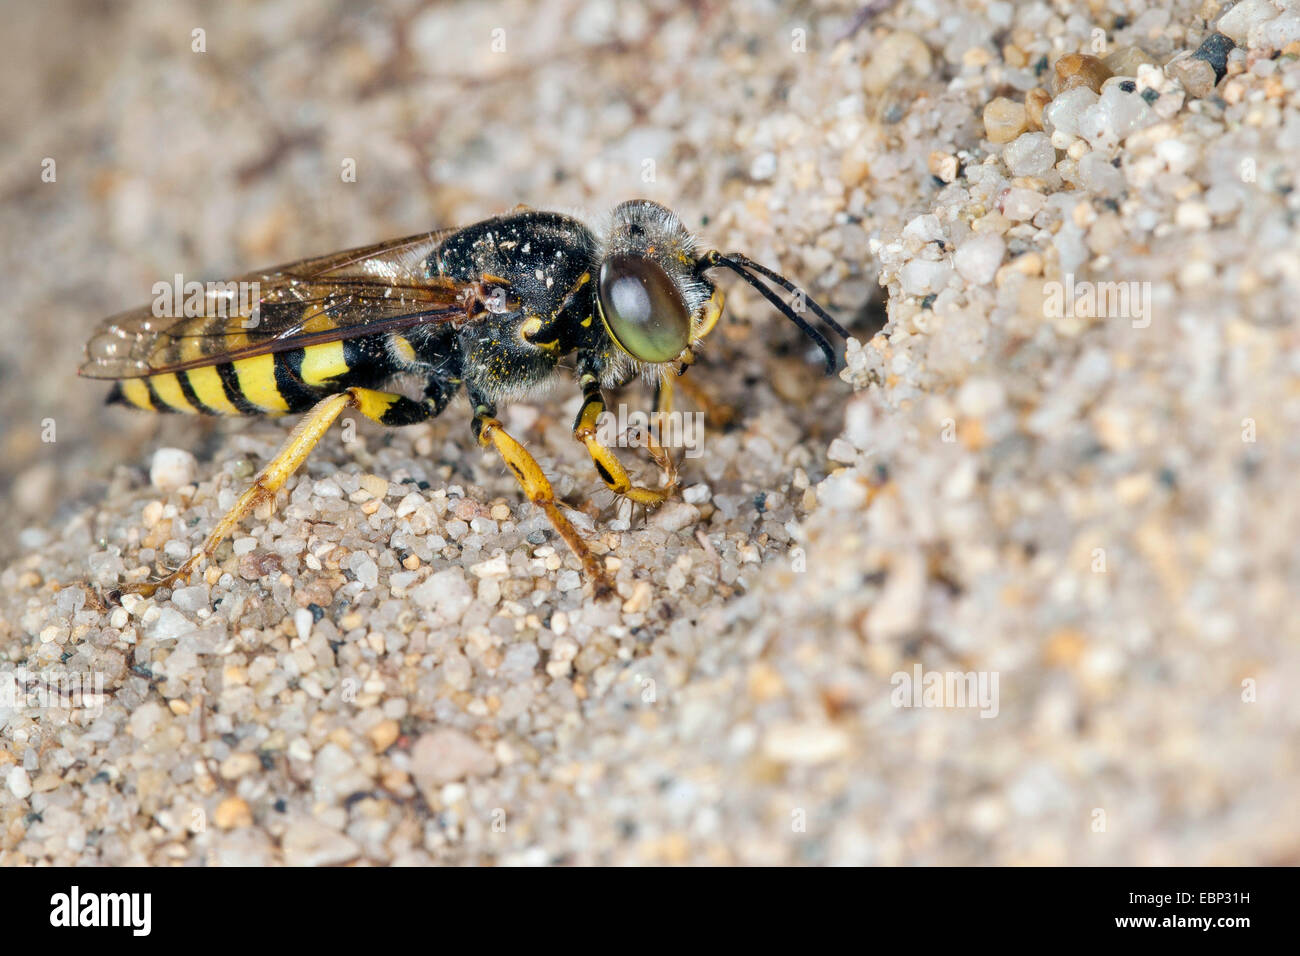 Sabbia wasp (Bembix oculata), in corrispondenza della sua den nella sabbia Foto Stock